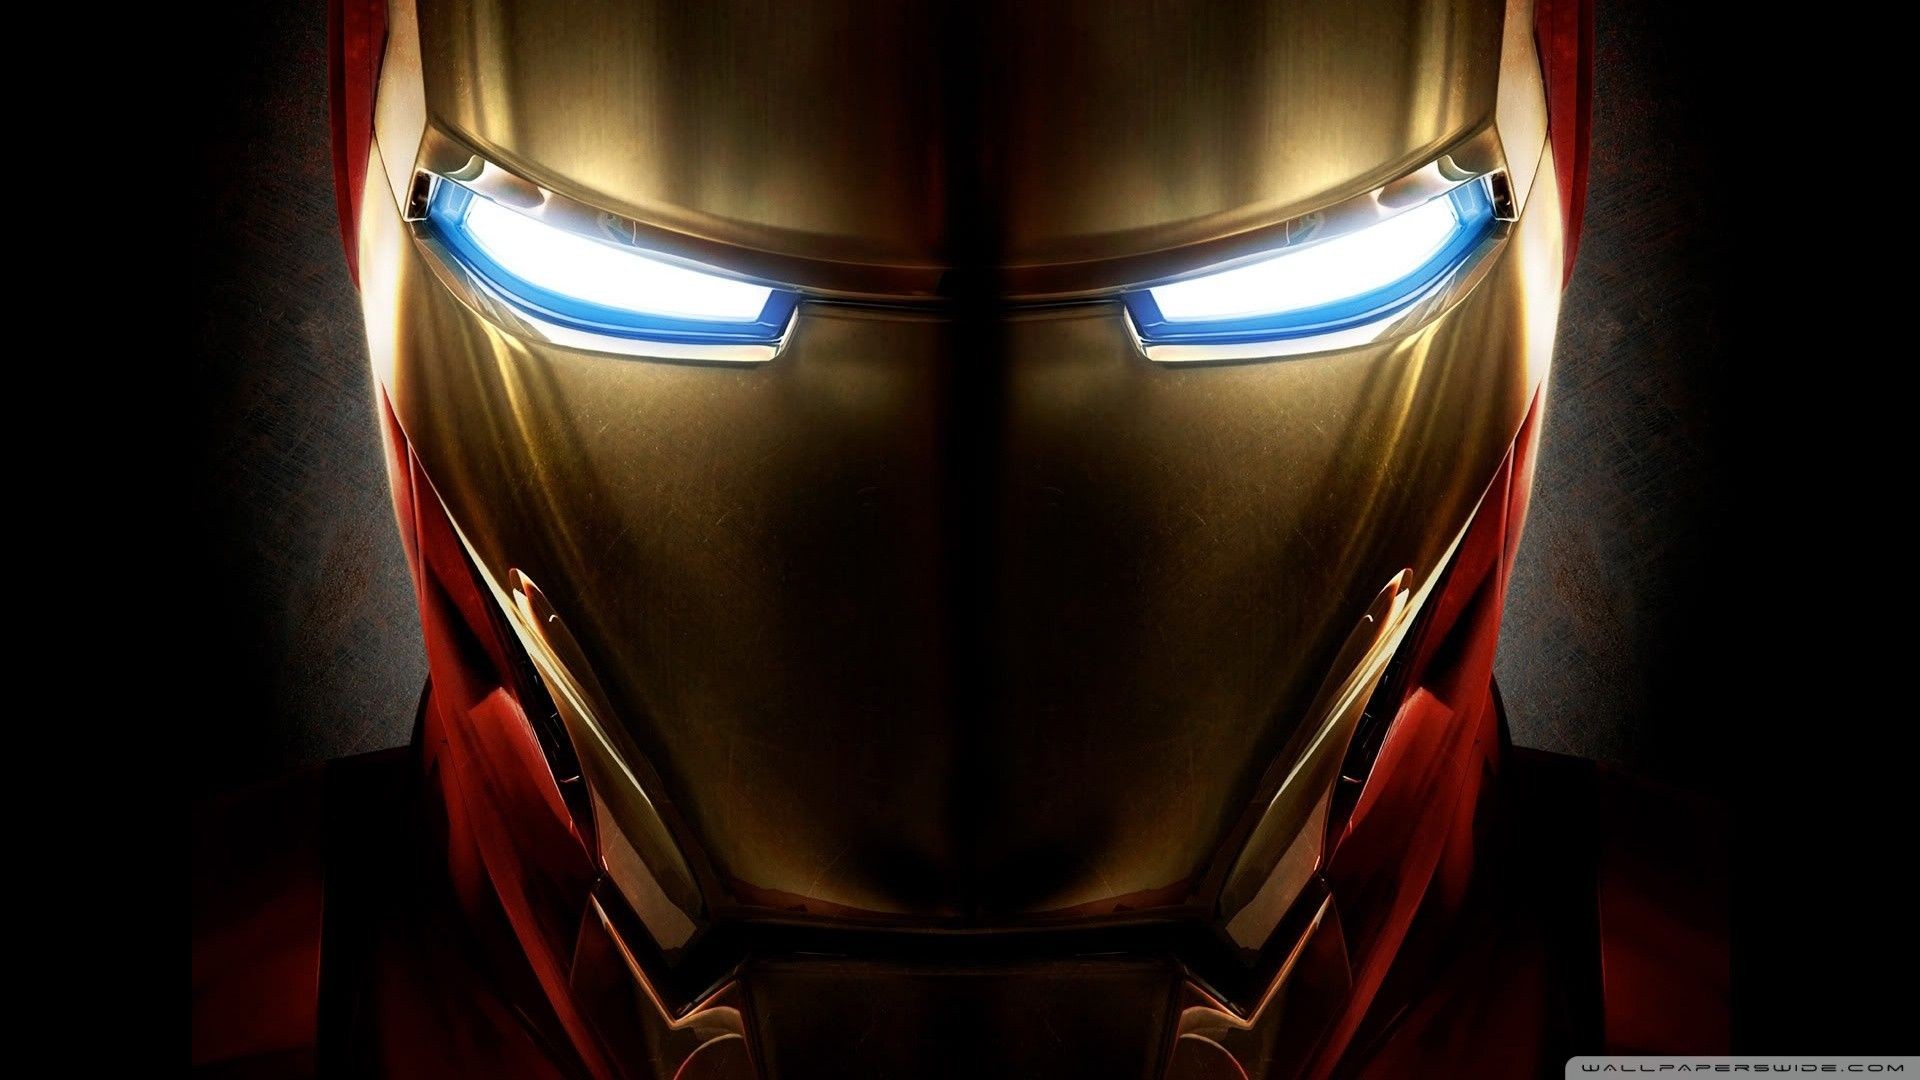 Iron Man Marvel Cinematic Universe Glowing Eyes Wallpaper:1920x1080